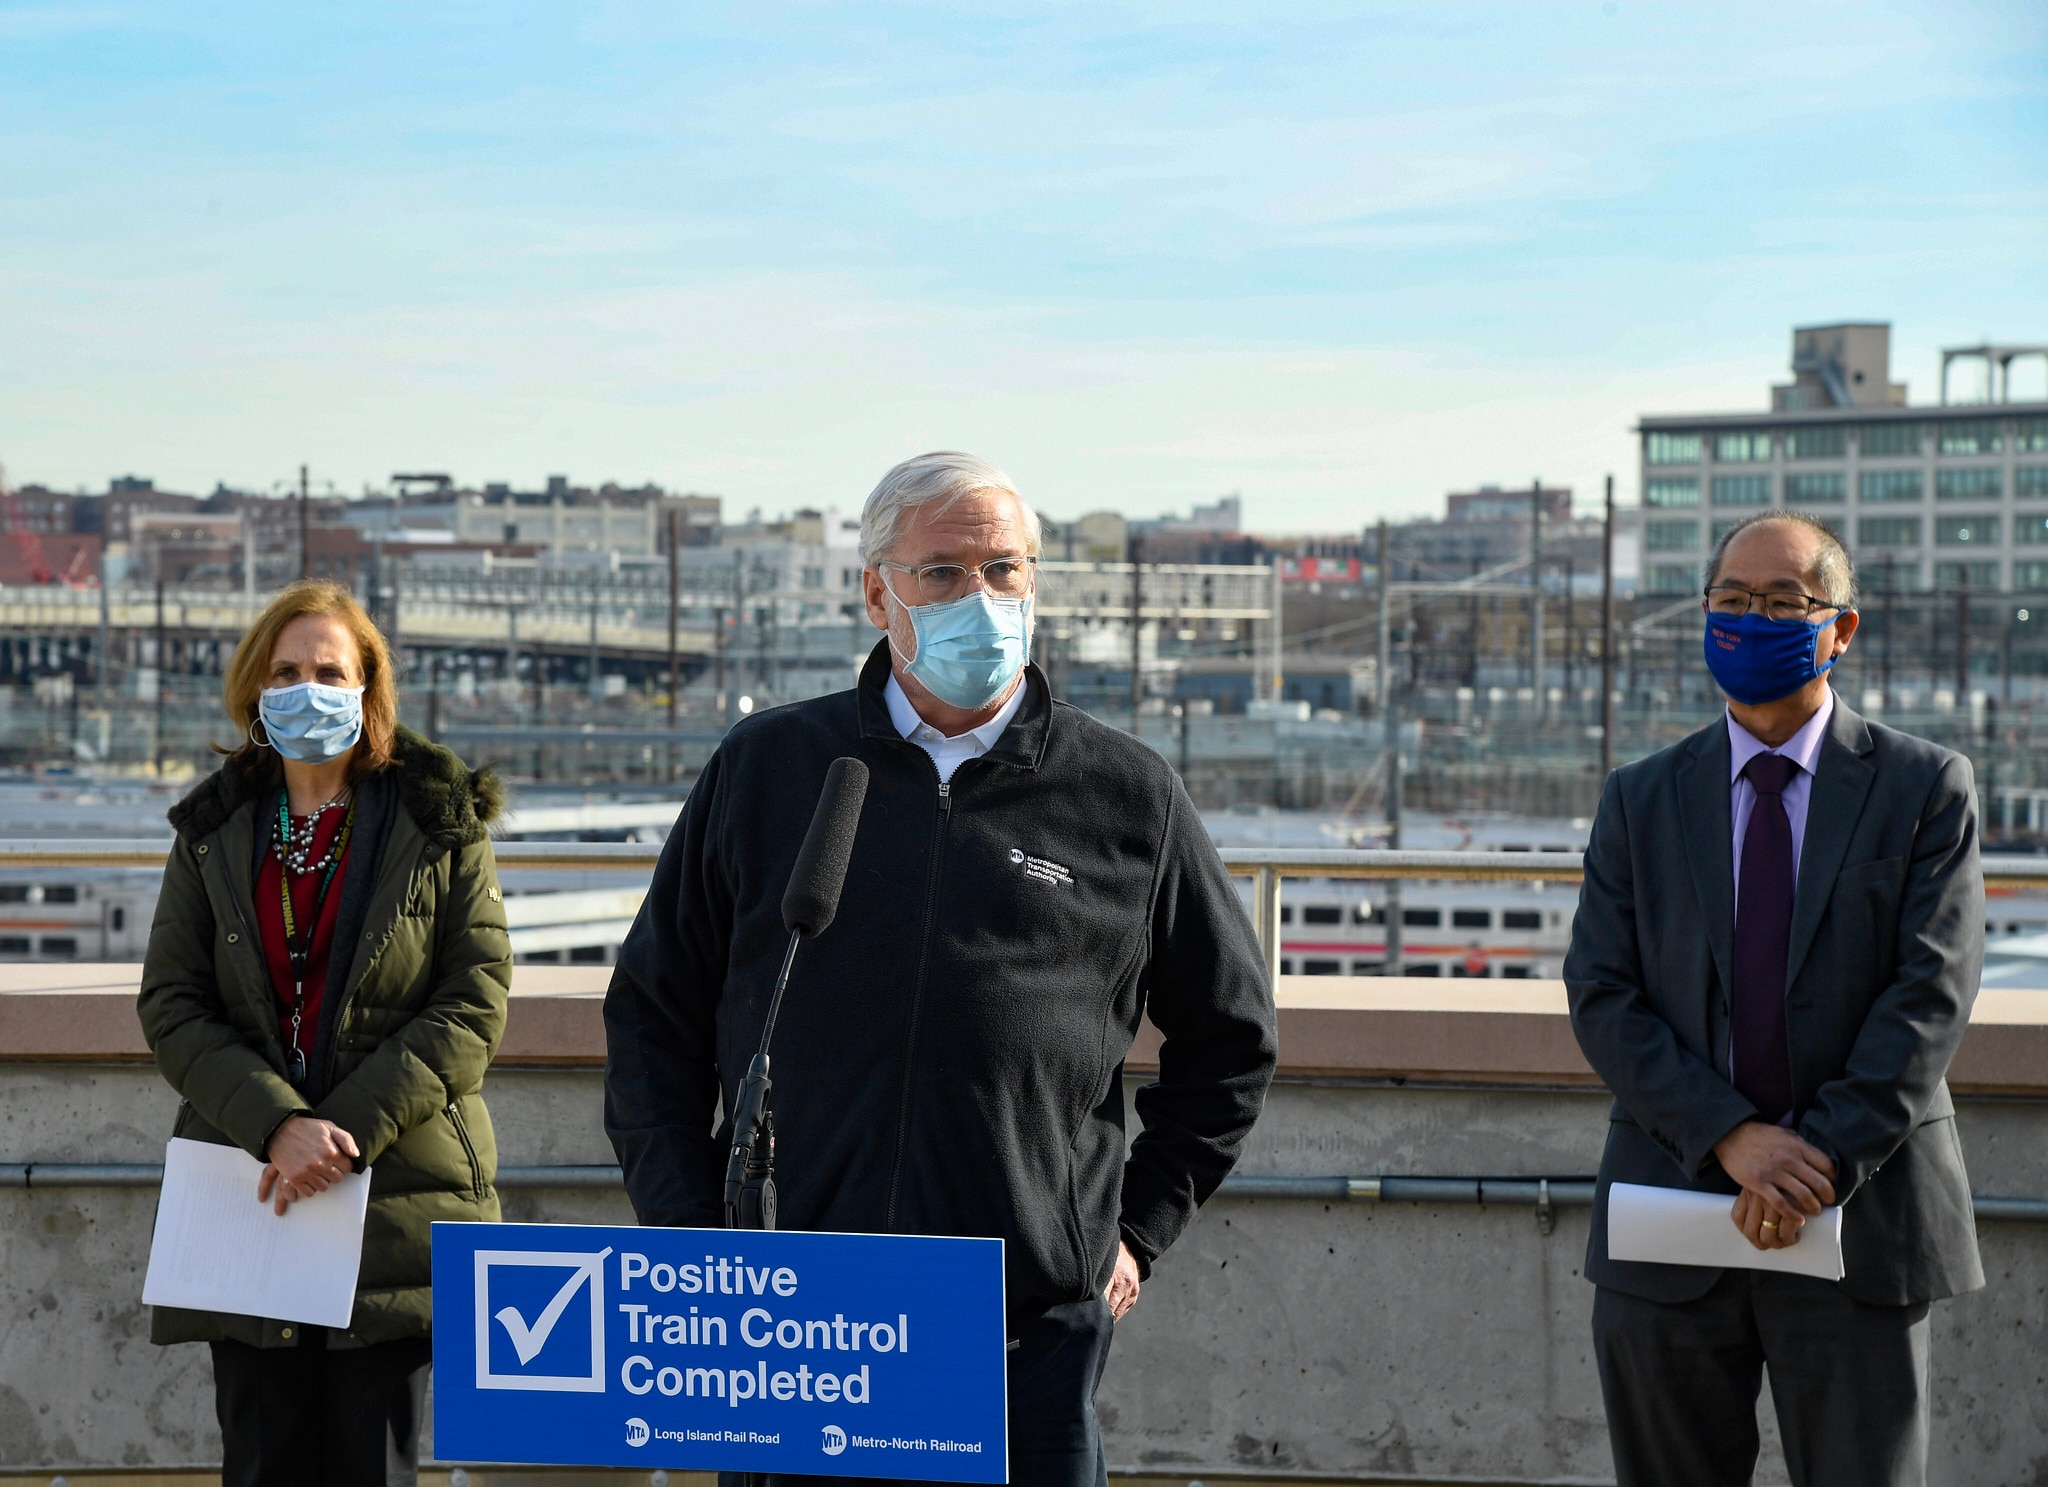 MTA CEO Patrick Foye at a podium on a rooftop overlooking Harold Interlocking